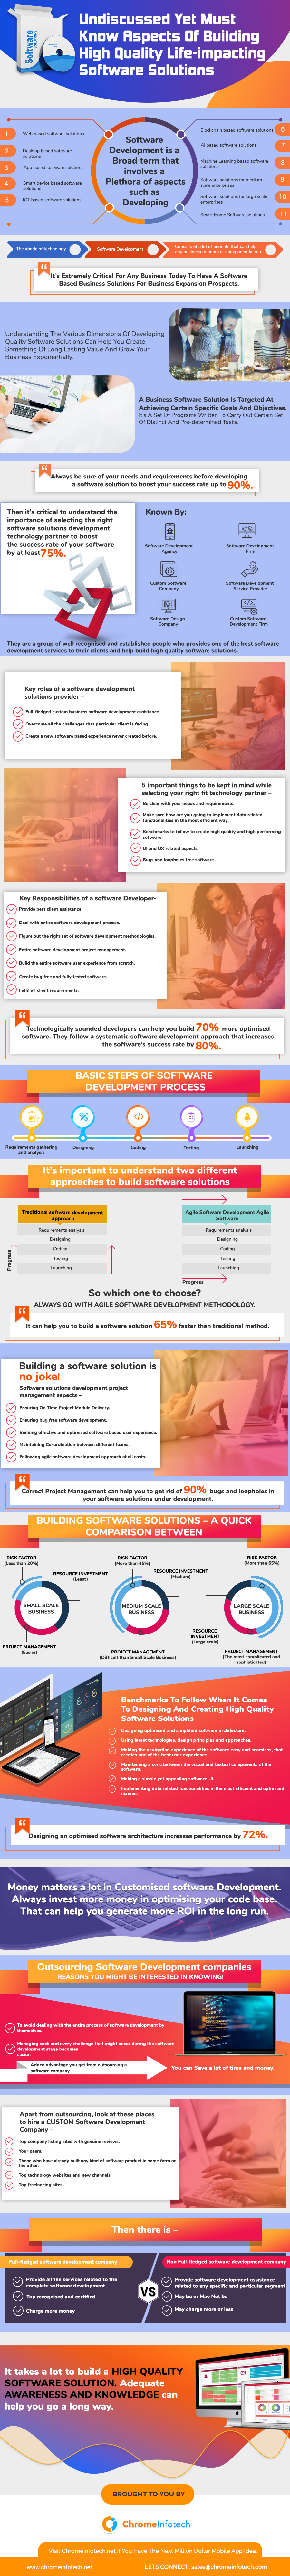 software application development-infographic